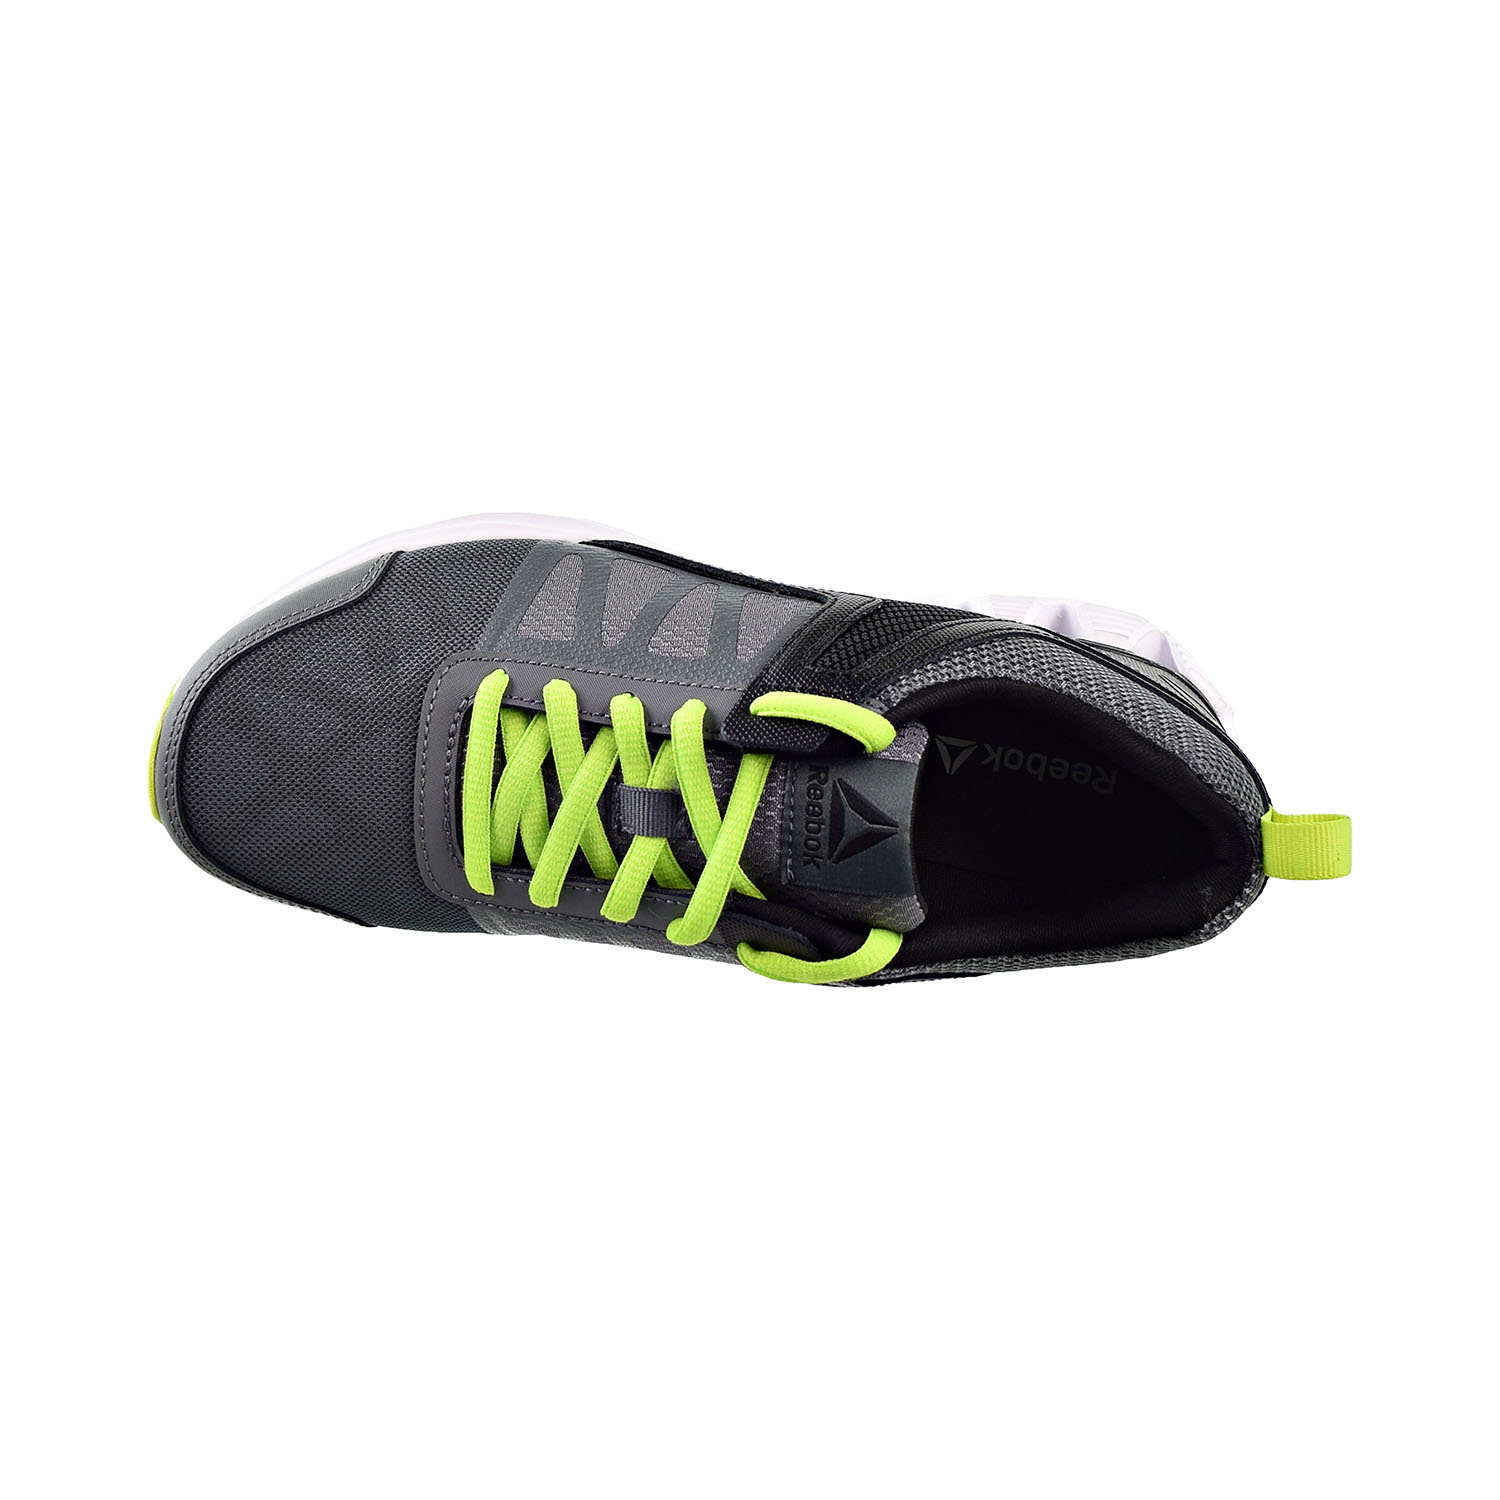 Reebok Zig Kick 2018 Big Kids Shoes Alloy/Black/Neon Lime cn7759 - image 5 of 6